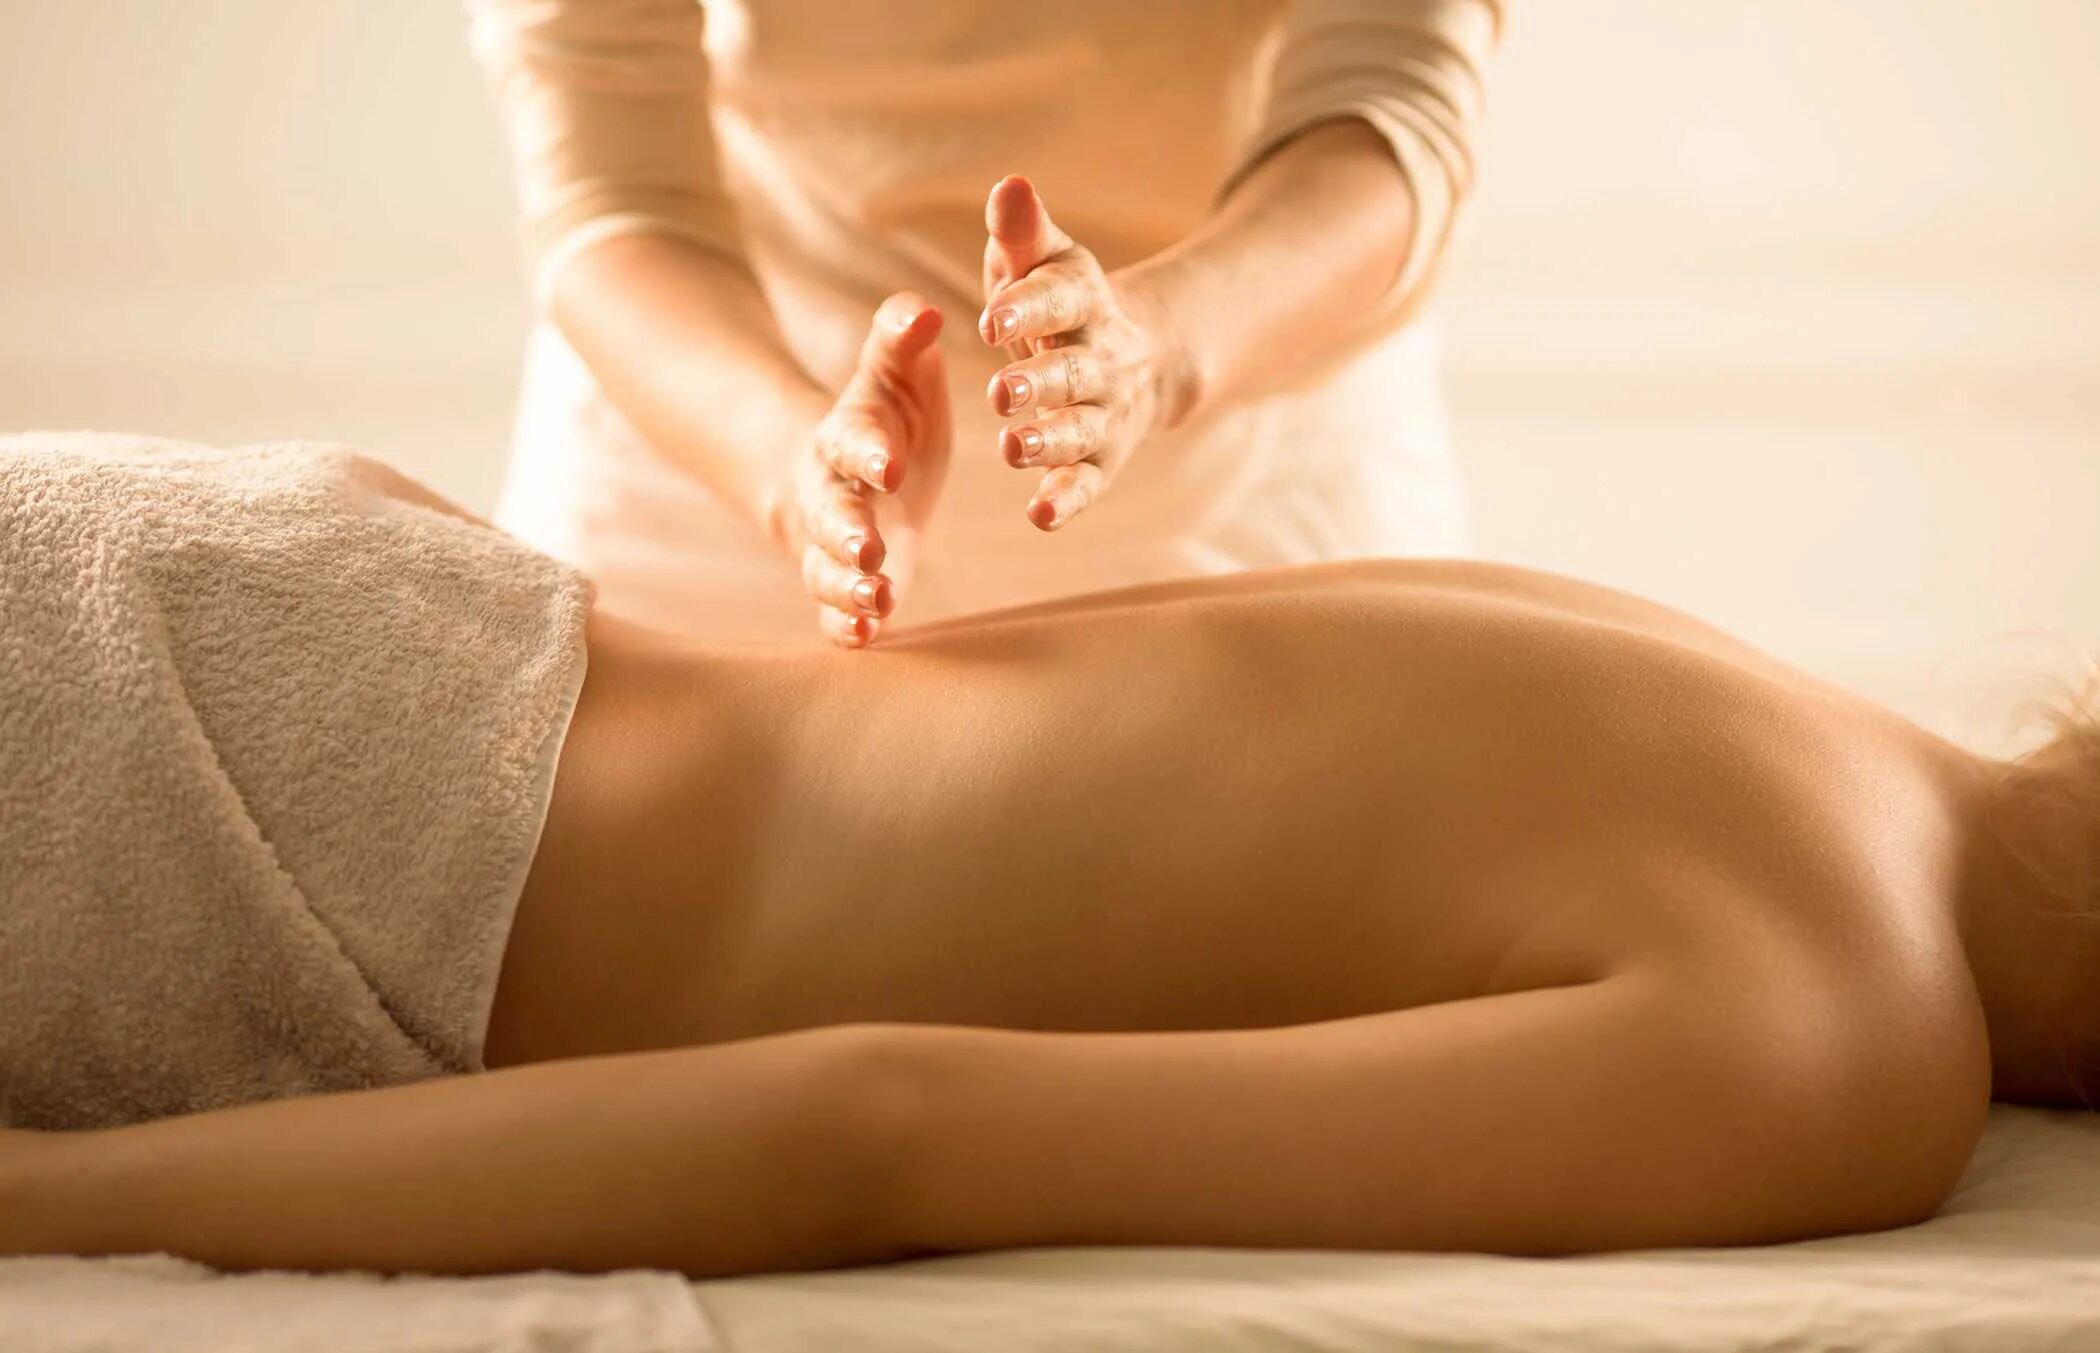 Massage o. Массаж. Классический массаж. Массаж тела. Ручной массаж.